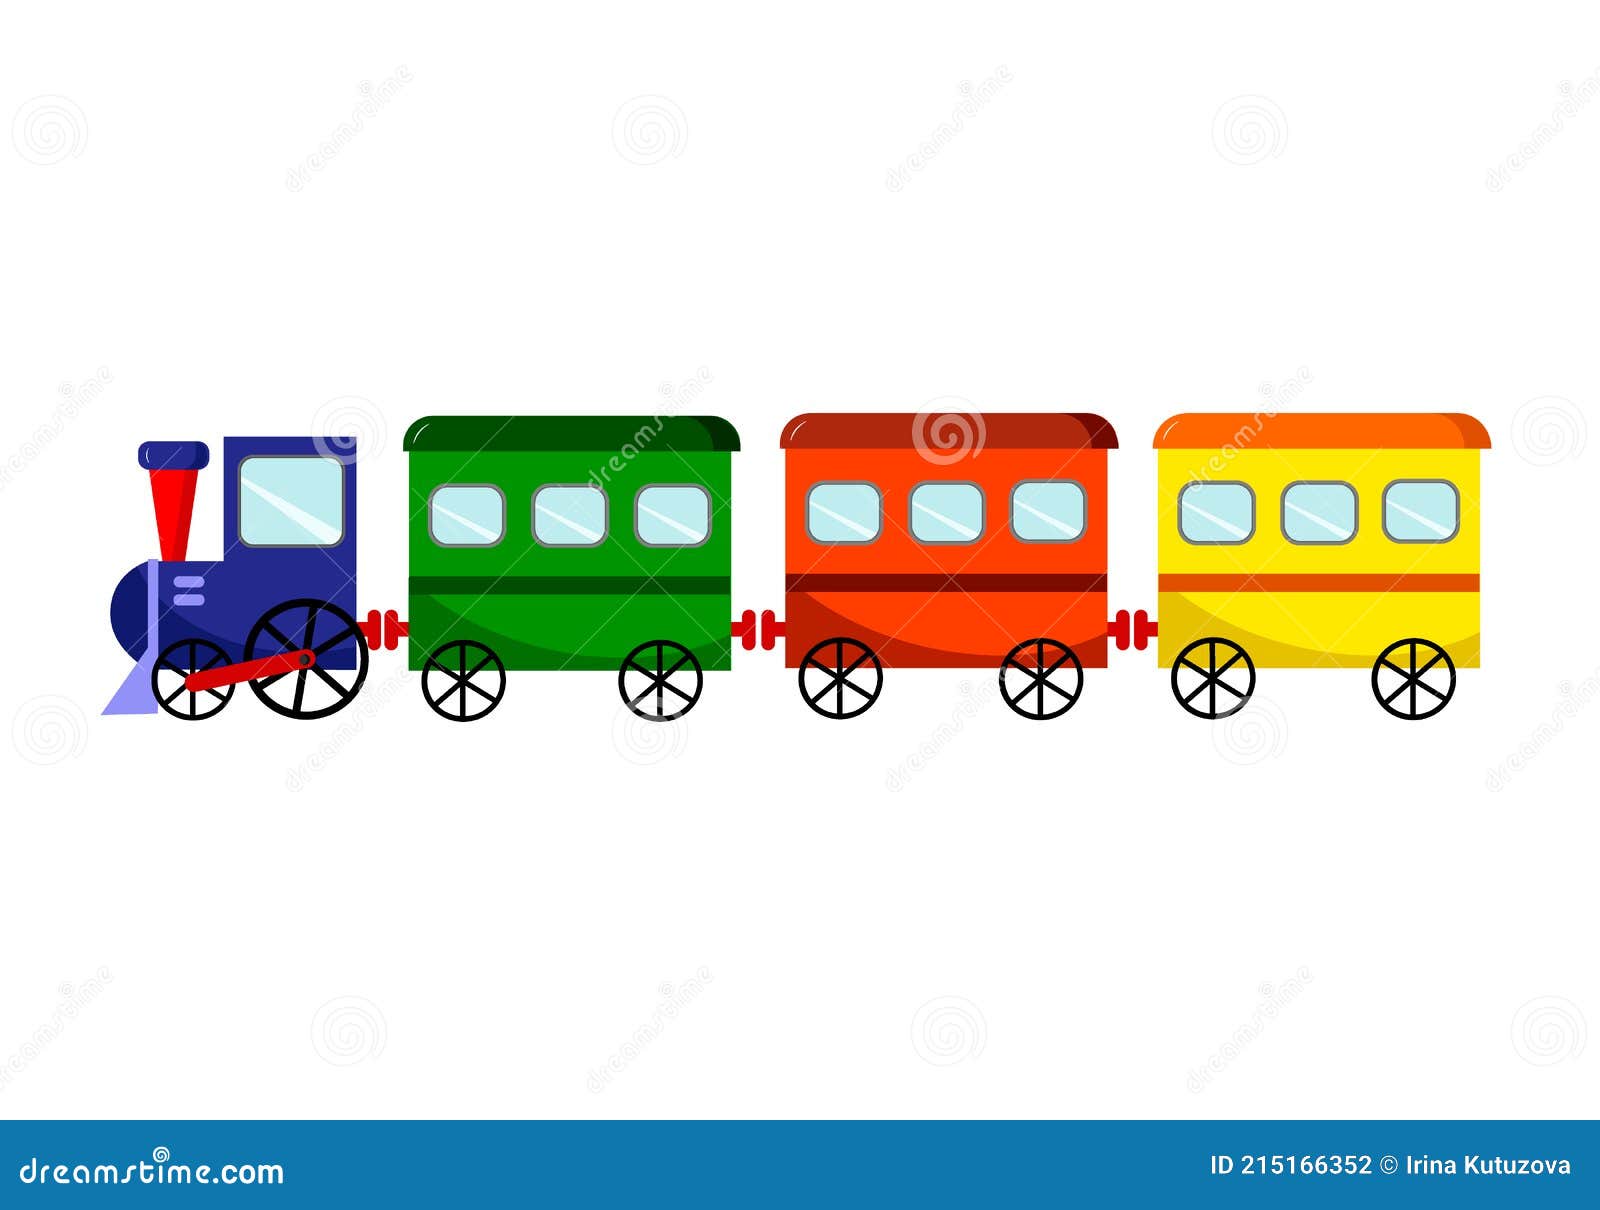 Ilustración Infantil De Un Tren De Juguete Con Carruajes Ilustración del  Vector - Ilustración de tren, verde: 215166352